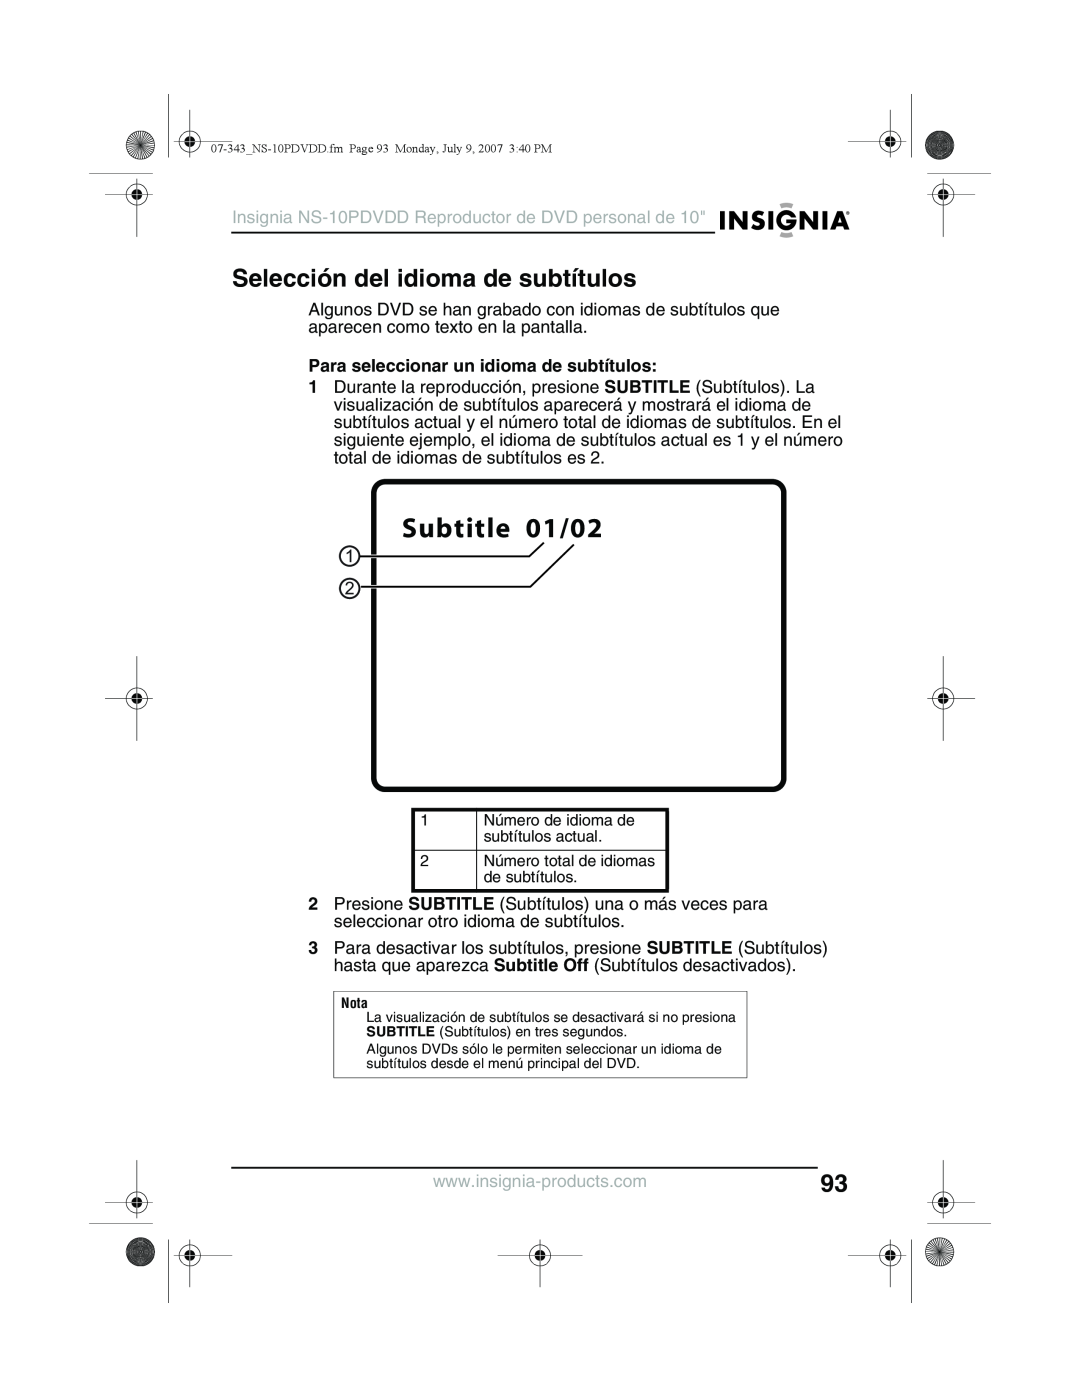 Insignia NS-10PDVDD manual Selección del idioma de subtítulos, Para seleccionar un idioma de subtítulos, Subtitle 01/02 